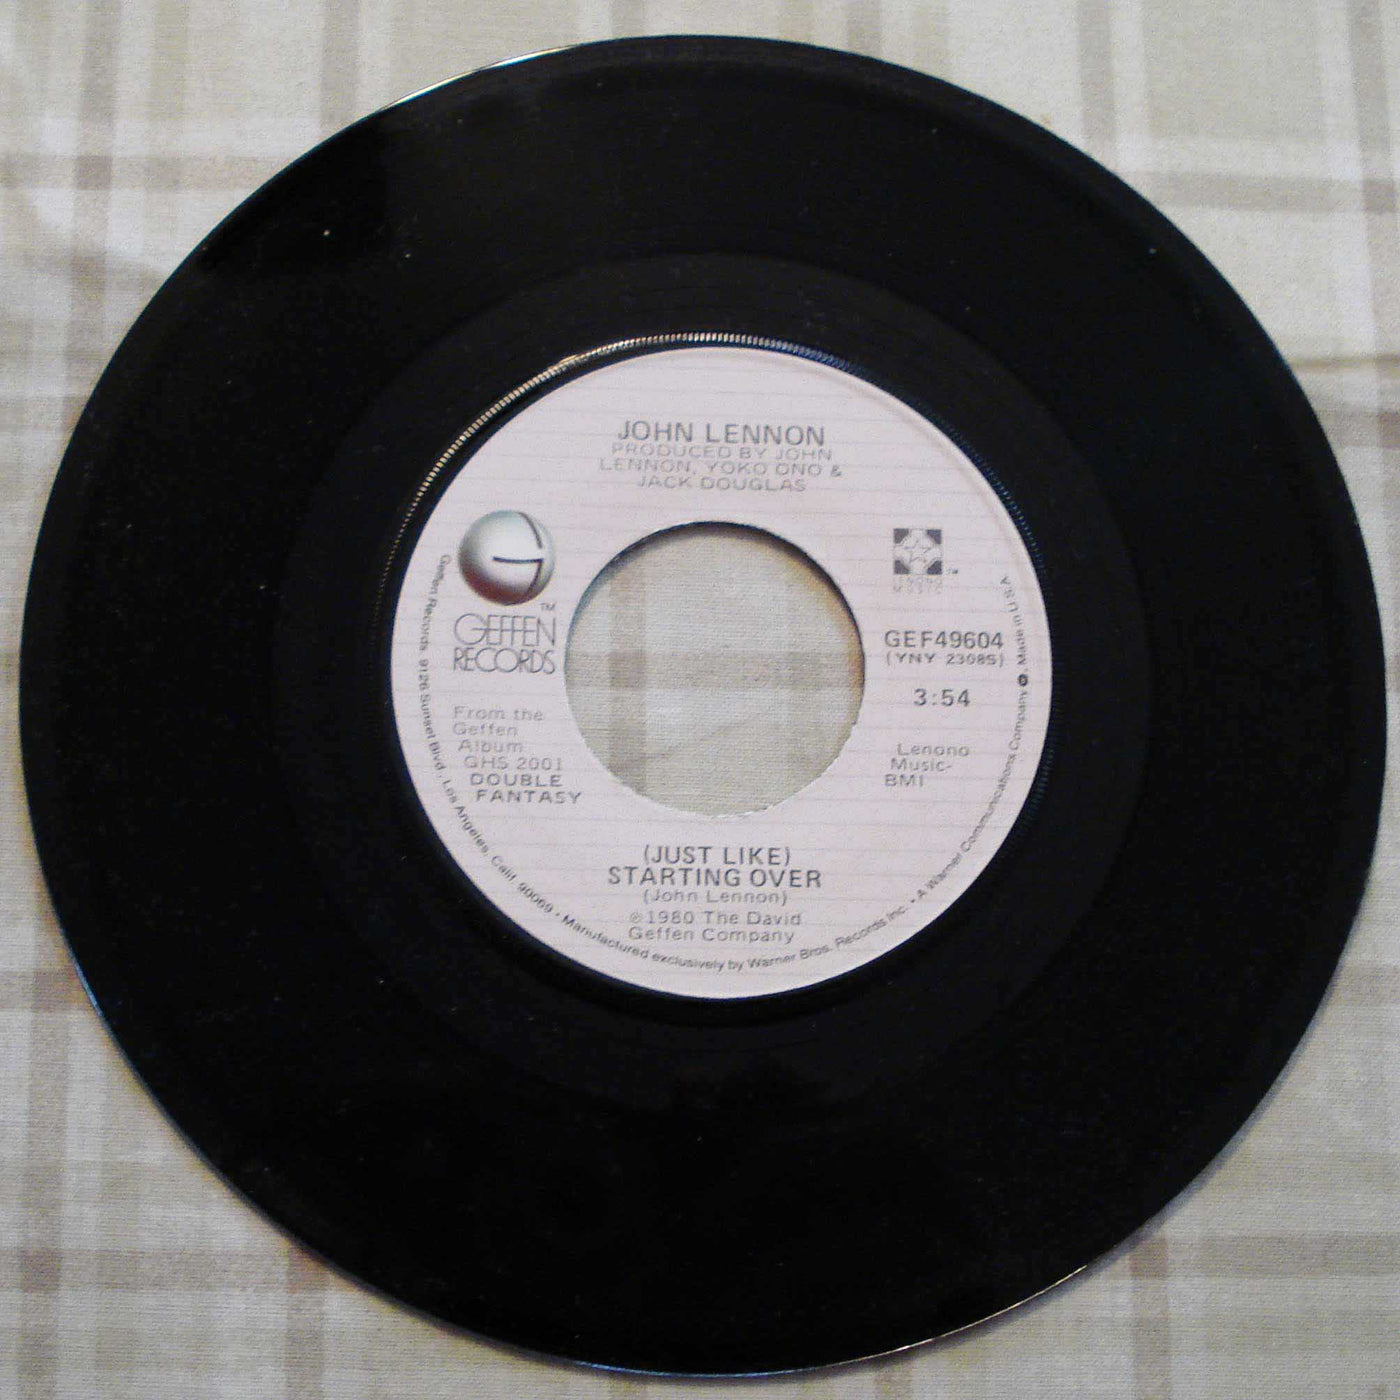 John Lennon - Just Like Starting Over - Yoko Ono - Kiss Kiss Kiss (1980) Vinyl Single 45rpm GEF49604